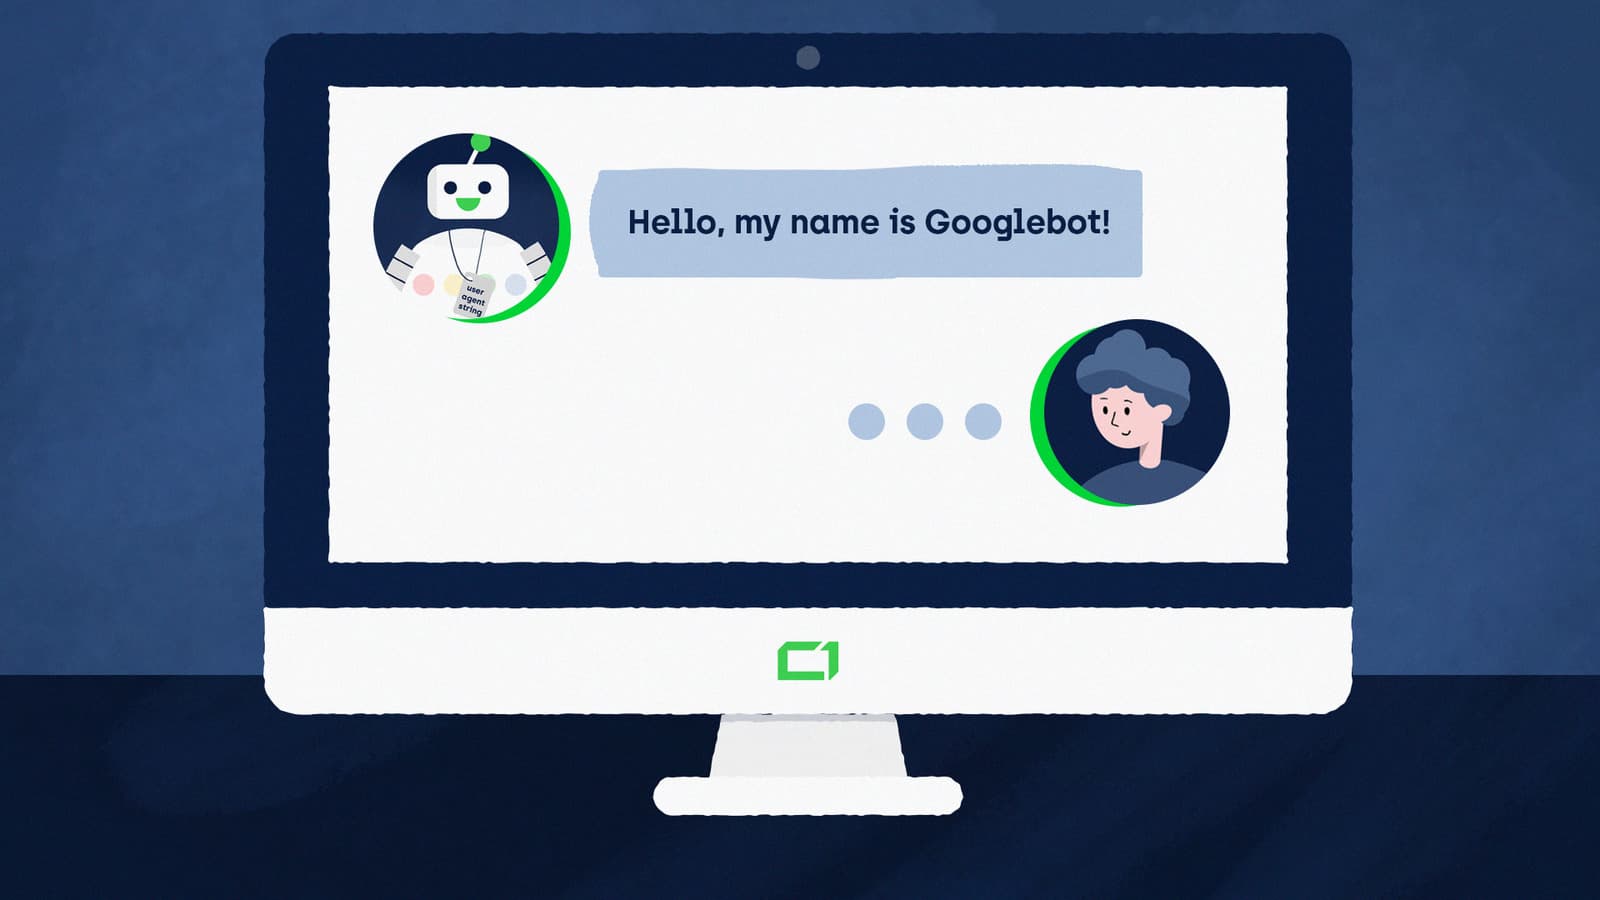 Hello! My name is Googlebot!